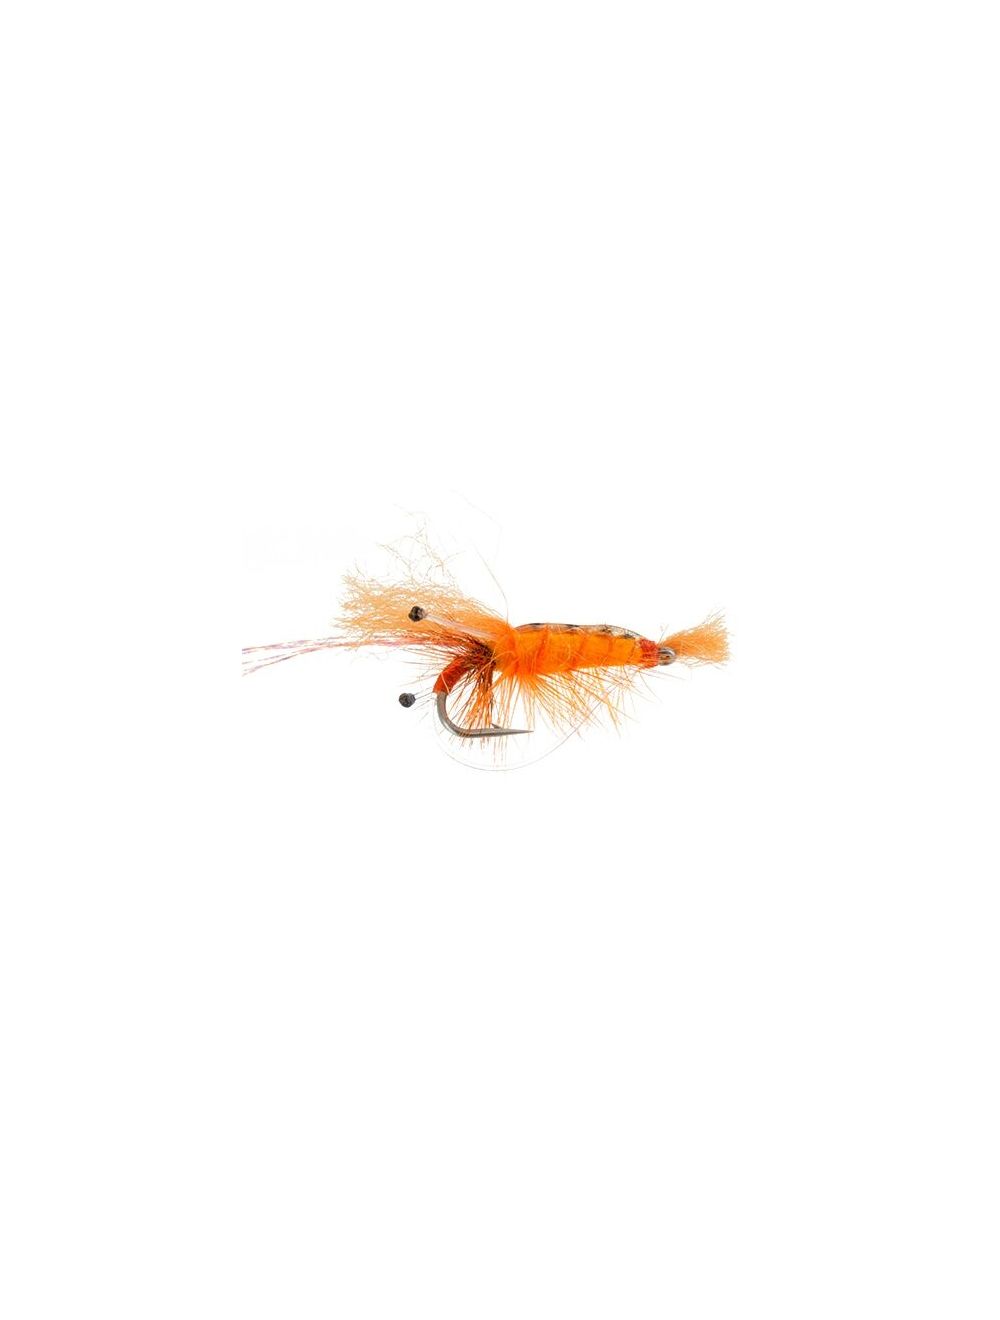 https://eadn-wc02-1020161.nxedge.io/cdn/media/catalog/product/cache/32b930e20bfef0c9badd7ee253a86131/b/o/bonefish-ceviche-shrimp-orange-fly-fishing-flies-saltwater_preview.jpeg